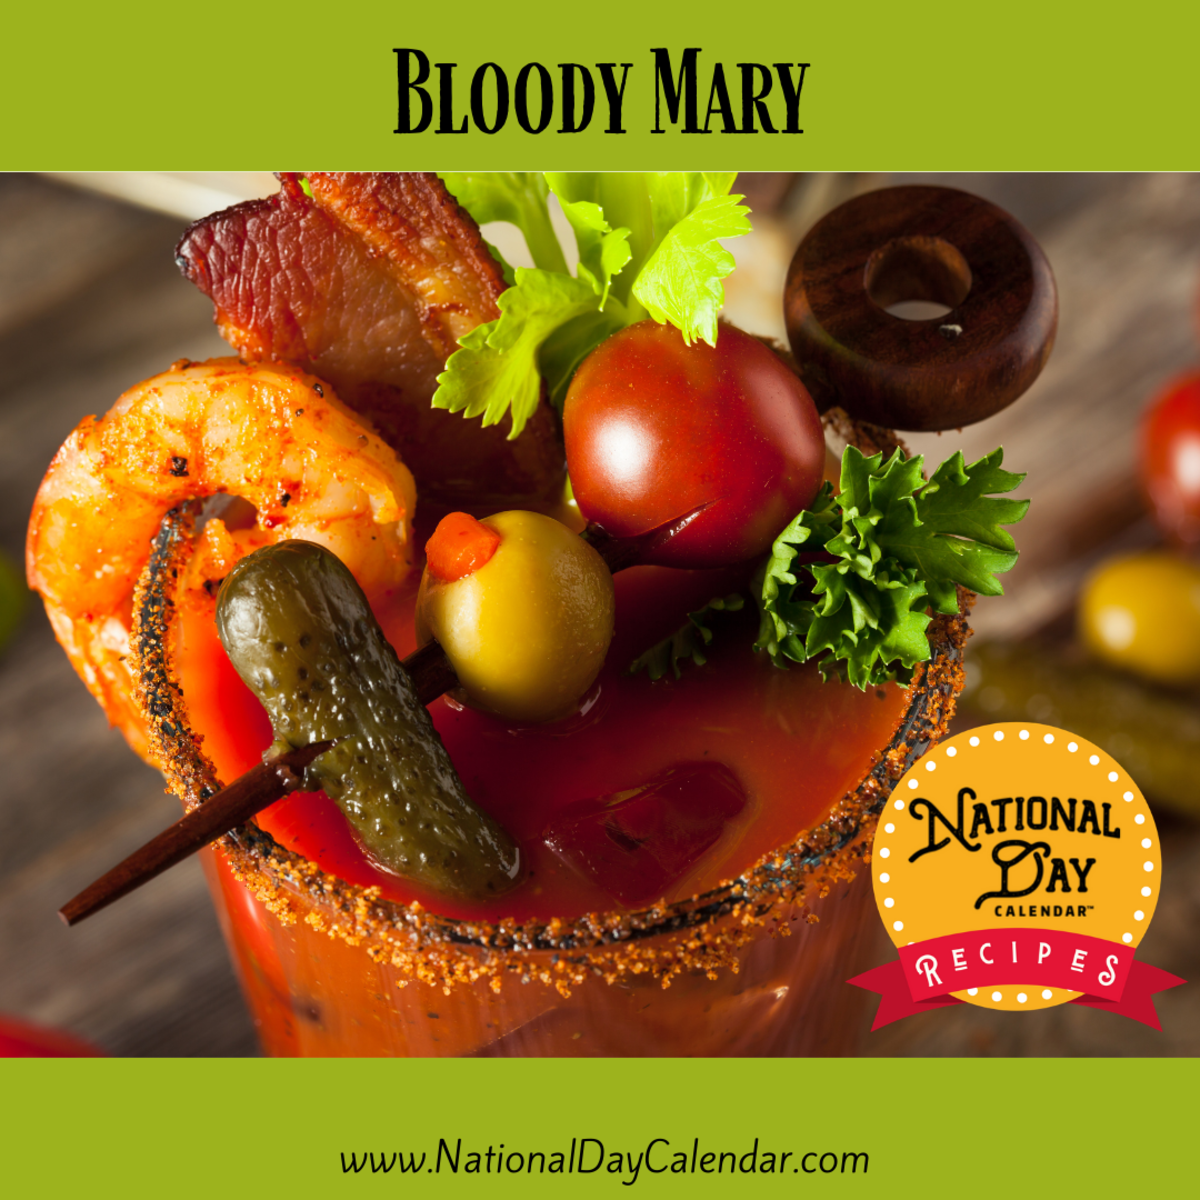 https://www.nationaldaycalendar.com/.image/t_share/MTk5Nzc3NDgzNDc1OTg2MDQ4/bloody-mary-recipe.png